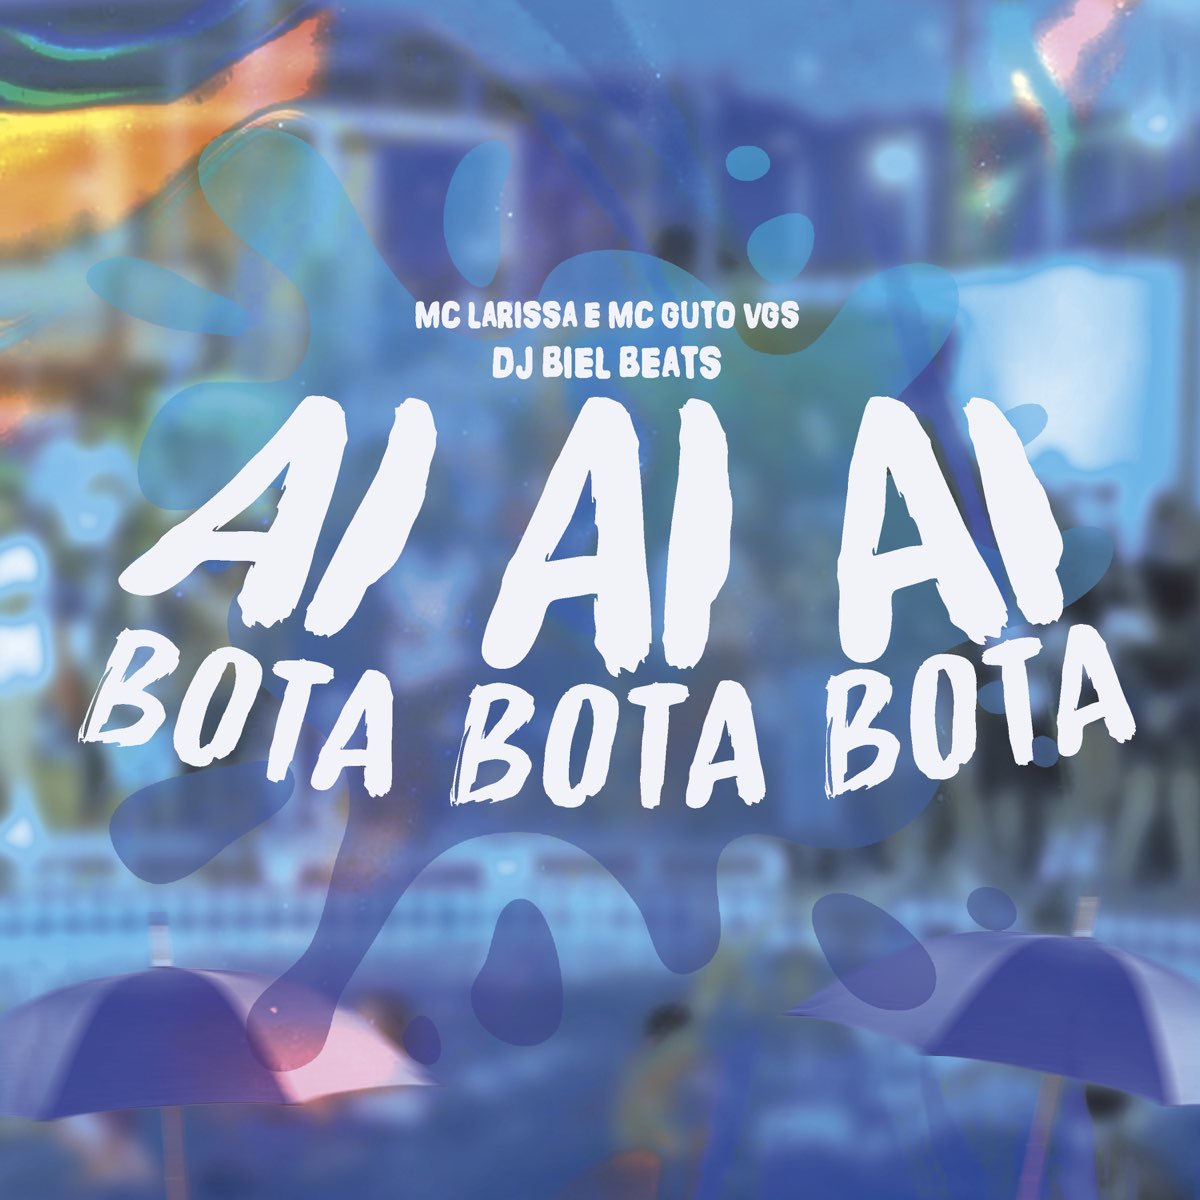 Ai Ai Ai Bota Bota Bota - Single by Mc Larissa, MC Guto VGS & DJ Biel Beats  on Apple Music